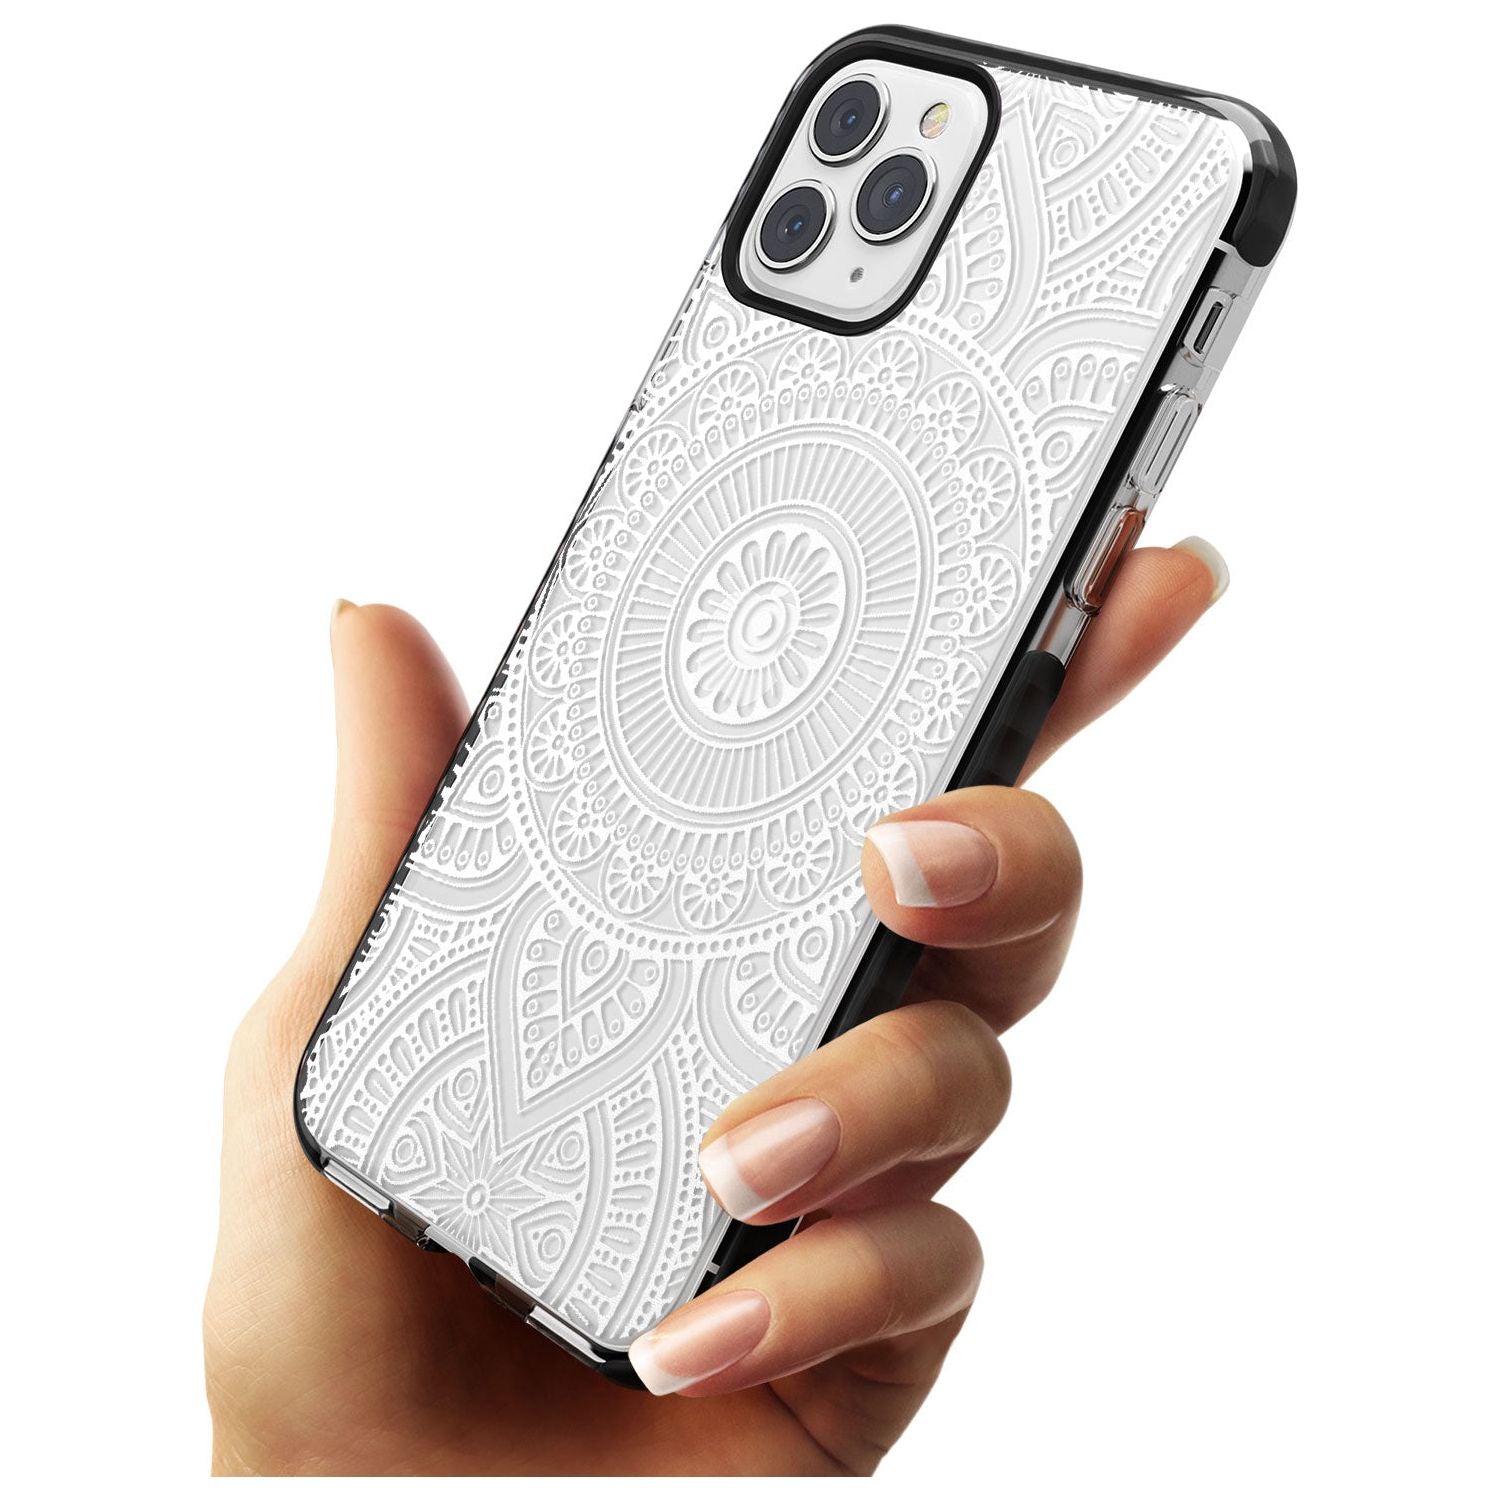 White Henna Flower Wheel Black Impact Phone Case for iPhone 11